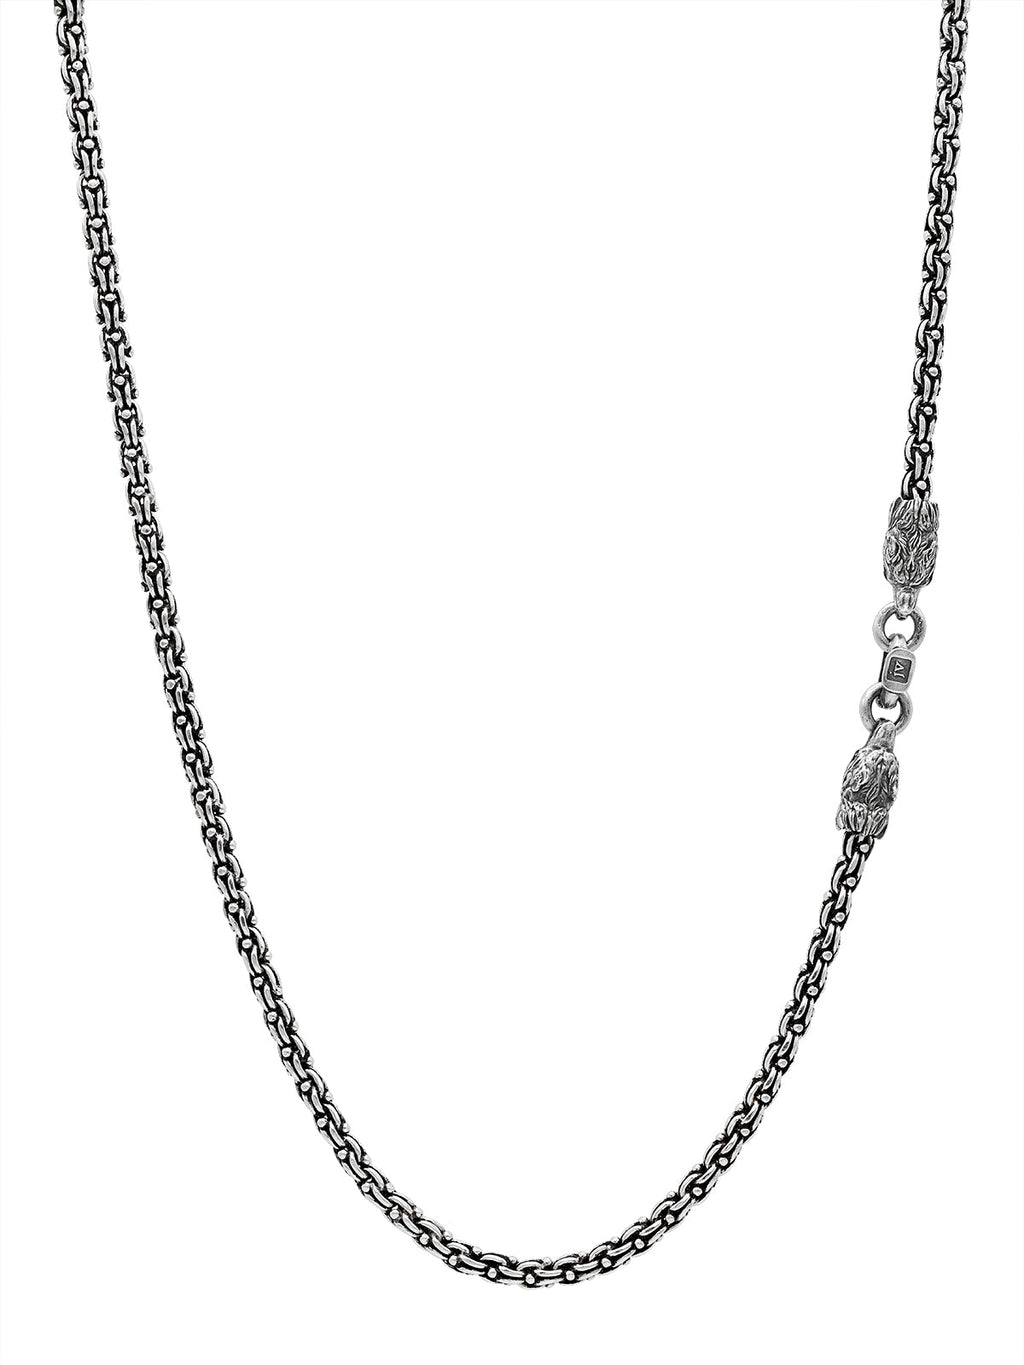 John Varvatos, Wolf Chain Necklace